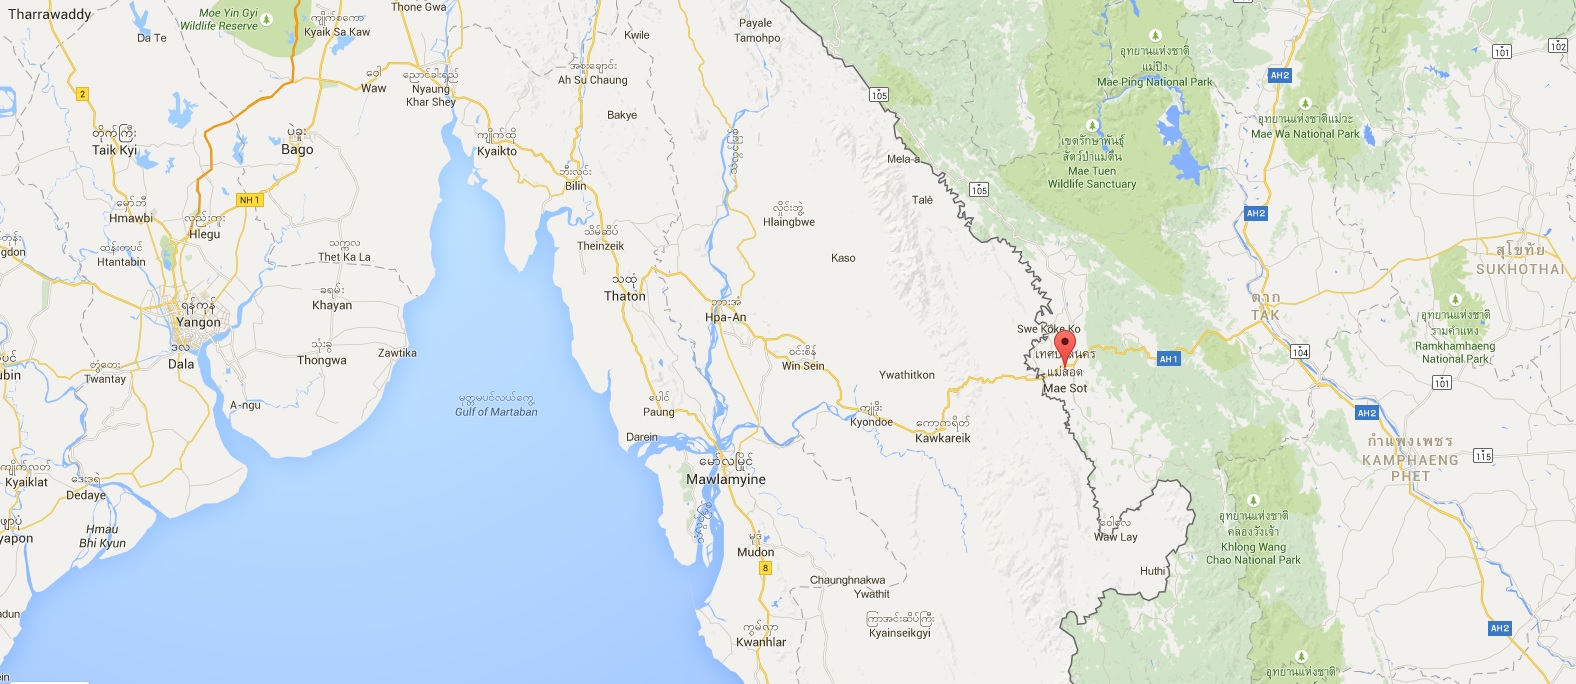 frontiere-thailande-birmanie-mae-sot-myawaddy